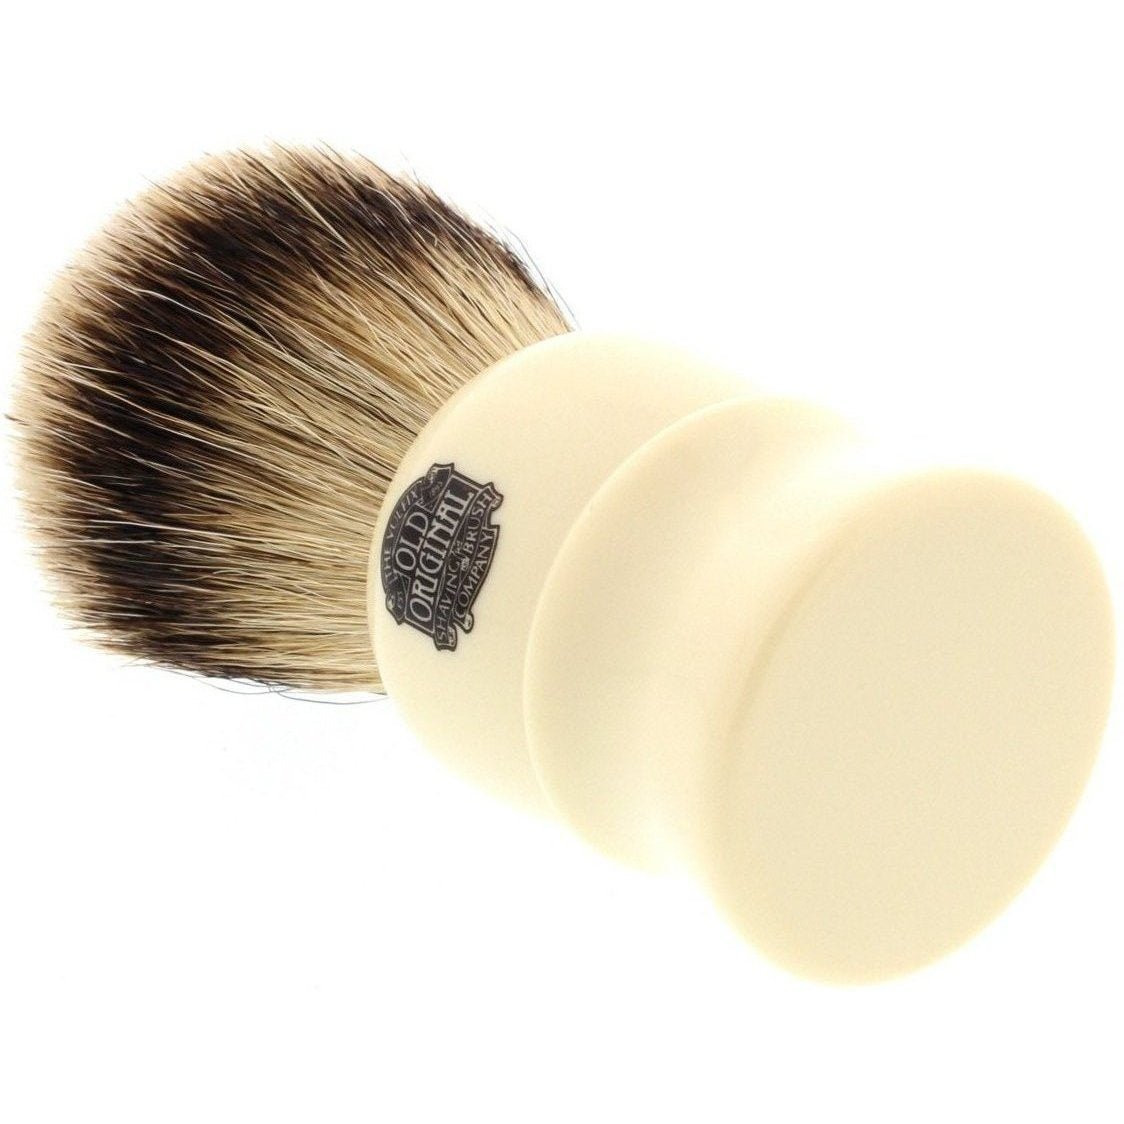 Product image 3 for Vulfix No. 41 Super Badger Shaving Brush